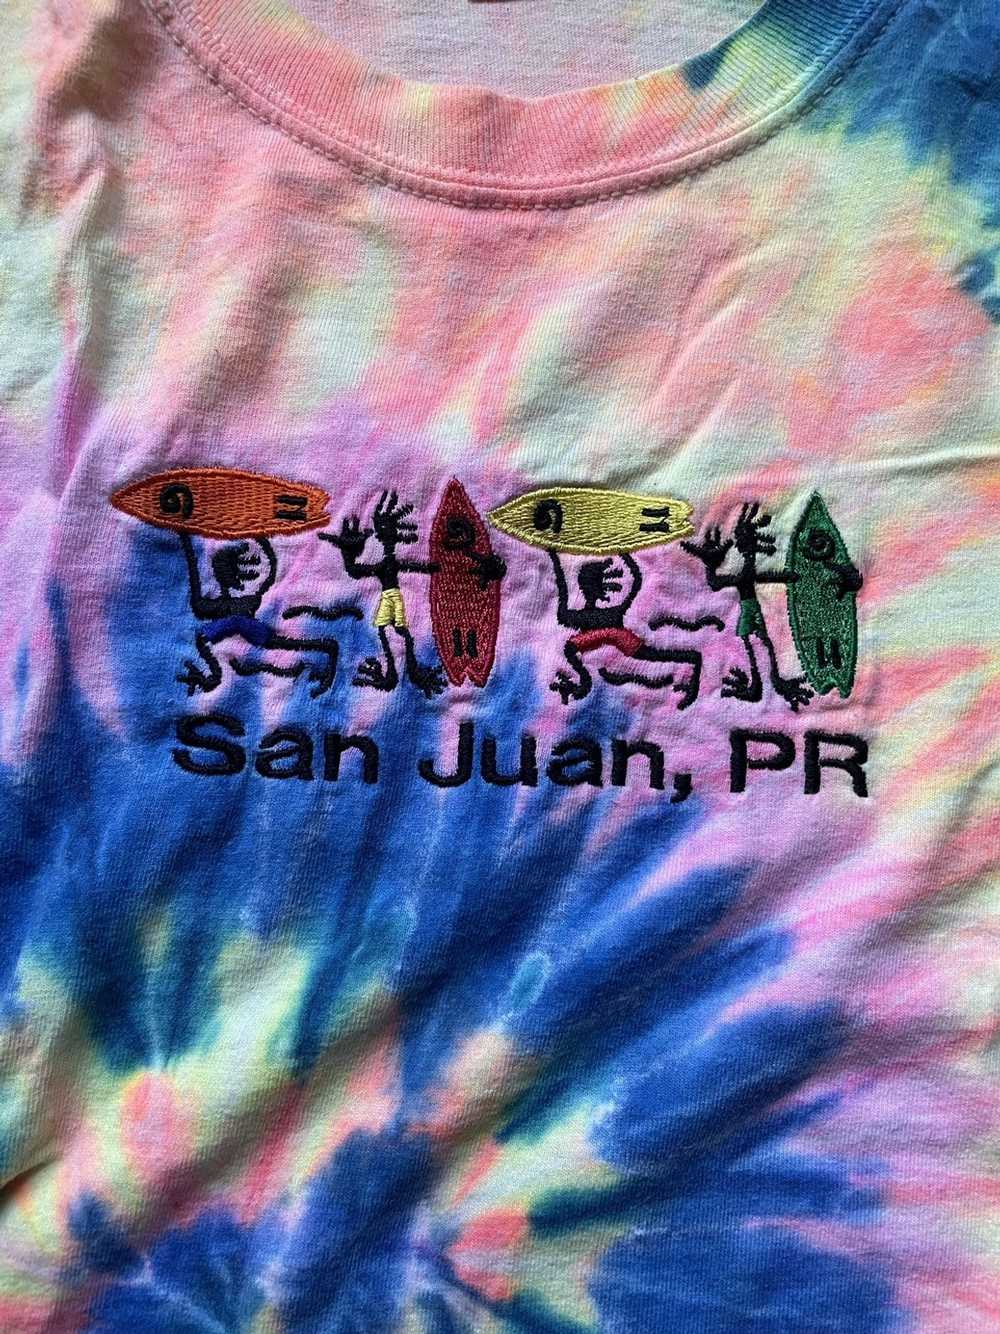 Vintage San juan puerto rico surf tie dye tshirt - image 3